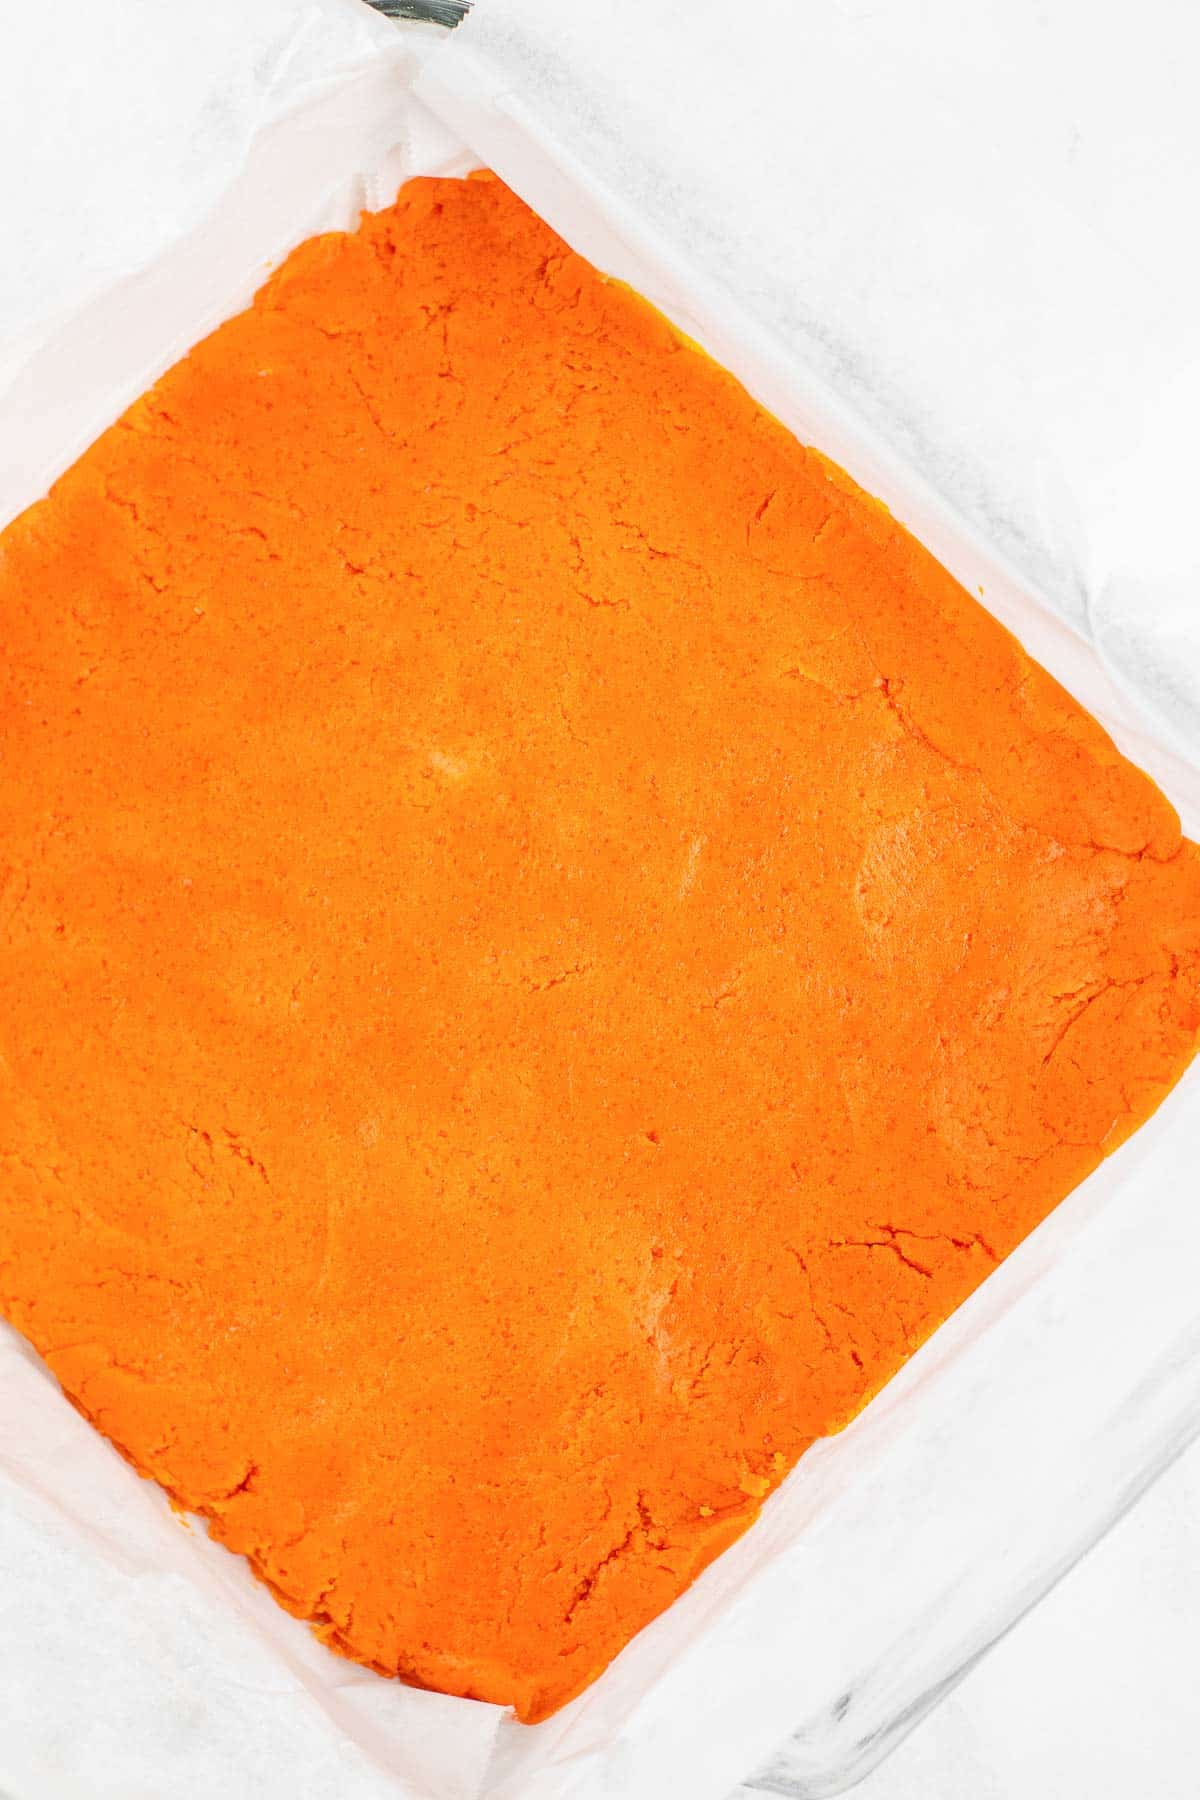 orange cookie dough pressed into a square glass baking dish.